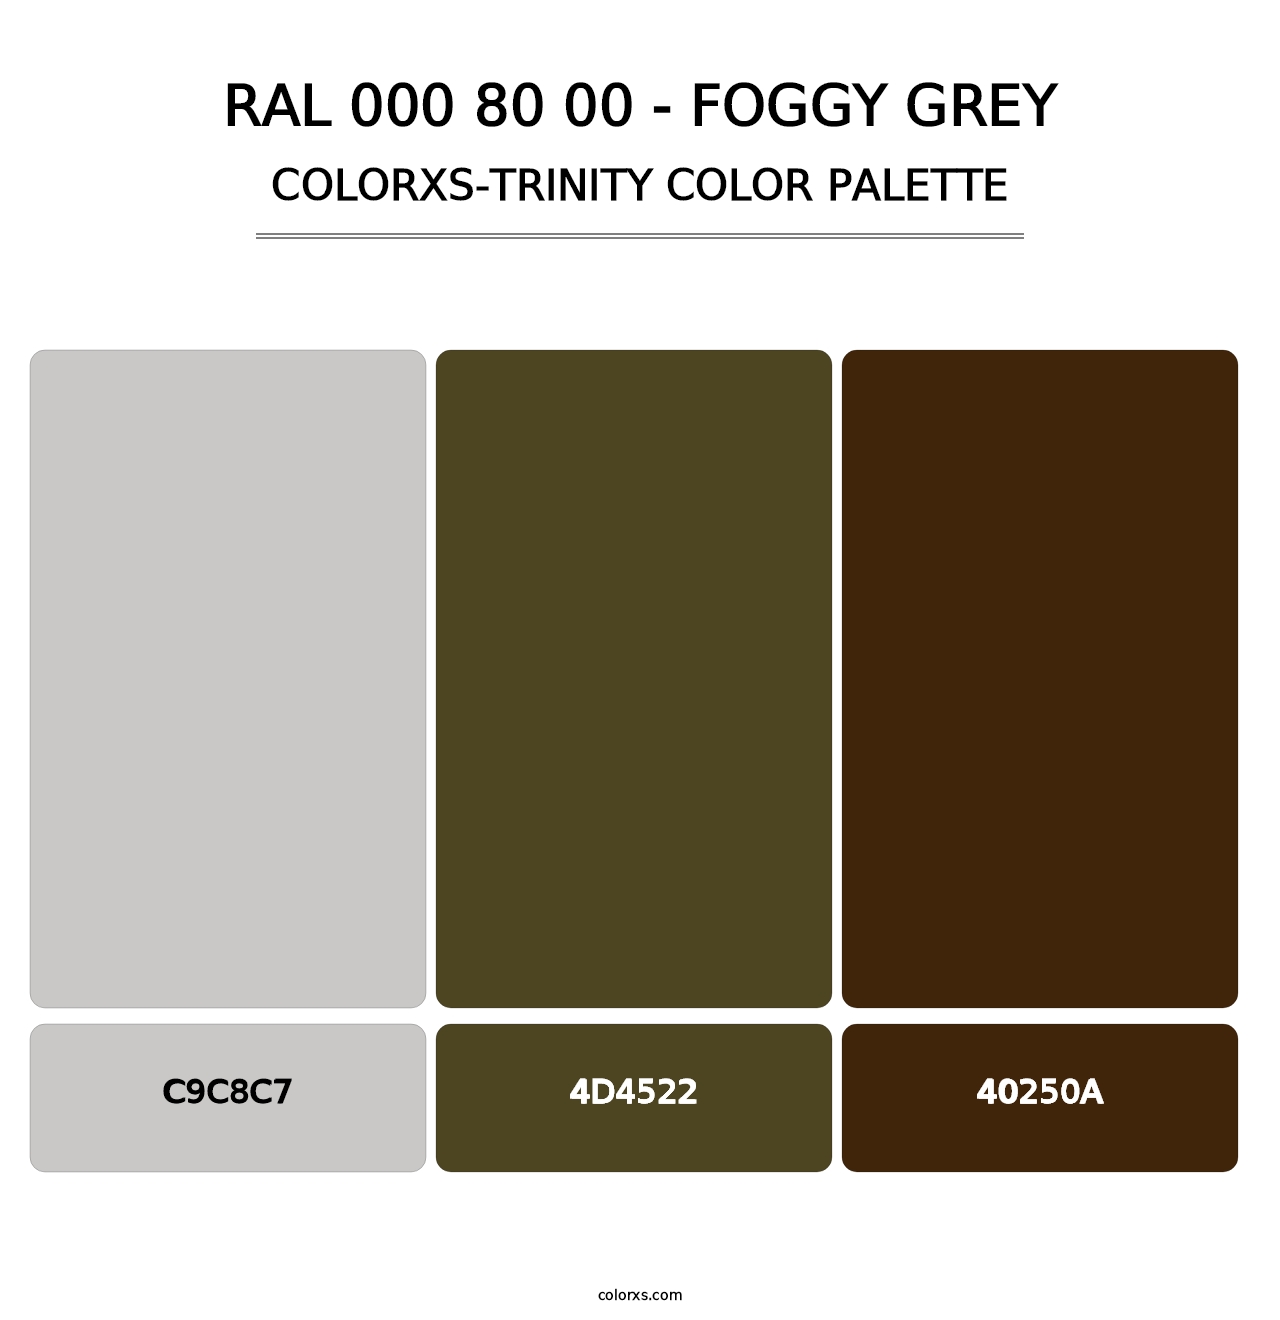 RAL 000 80 00 - Foggy Grey - Colorxs Trinity Palette